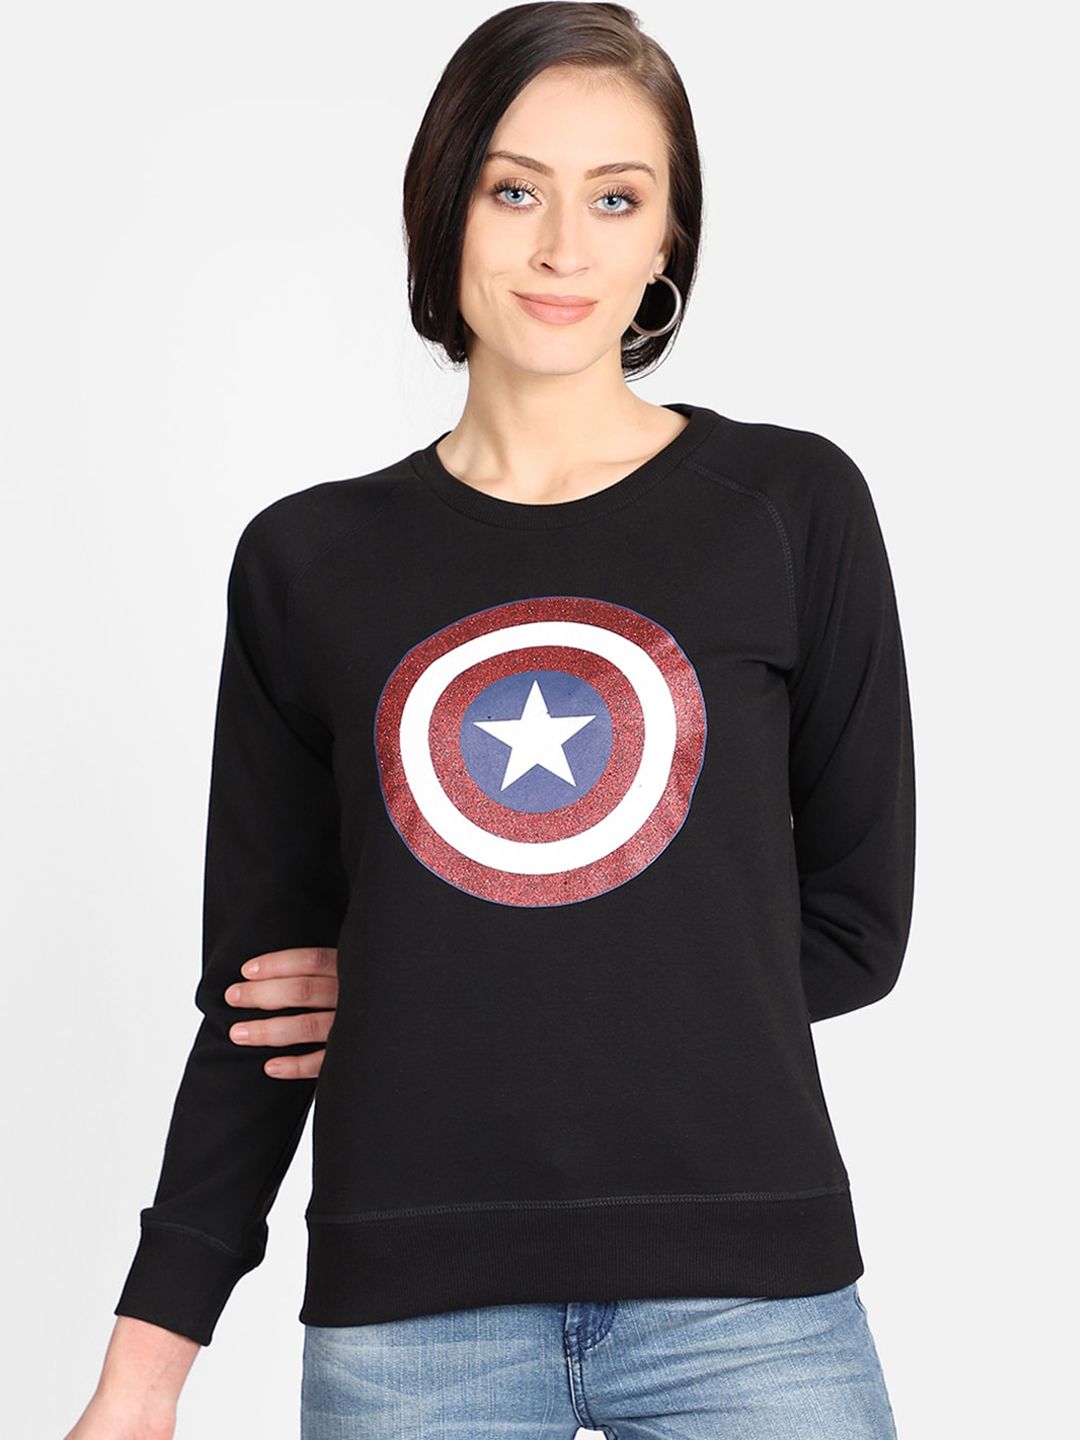 Free Authority Women Black Captain America Printed Cotton Sweatshirt Price in India